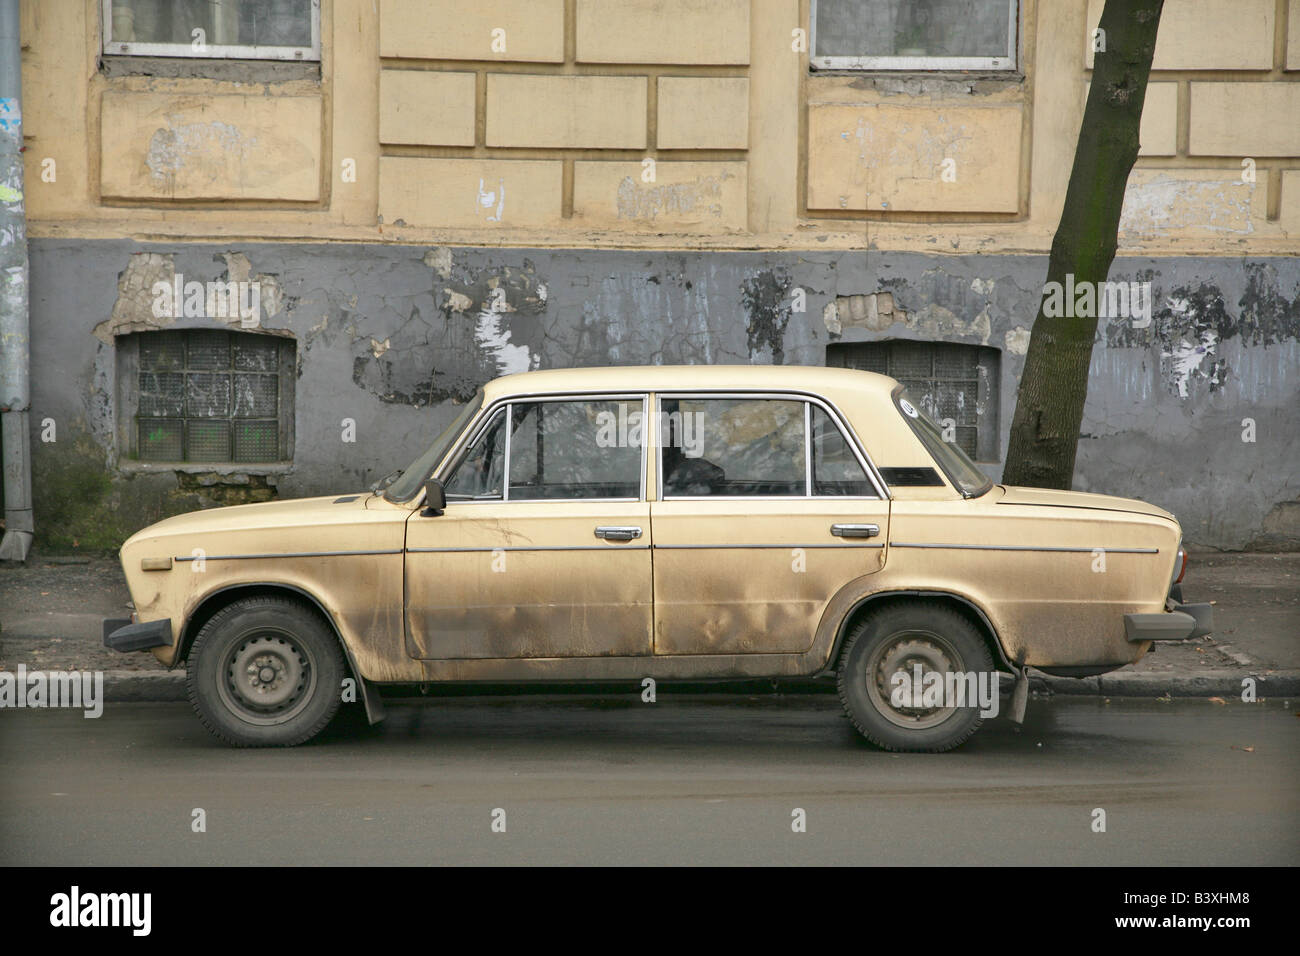 Old dirty cream Lada saloon car in Lviv or Lvov, Ukraine Stock Photo